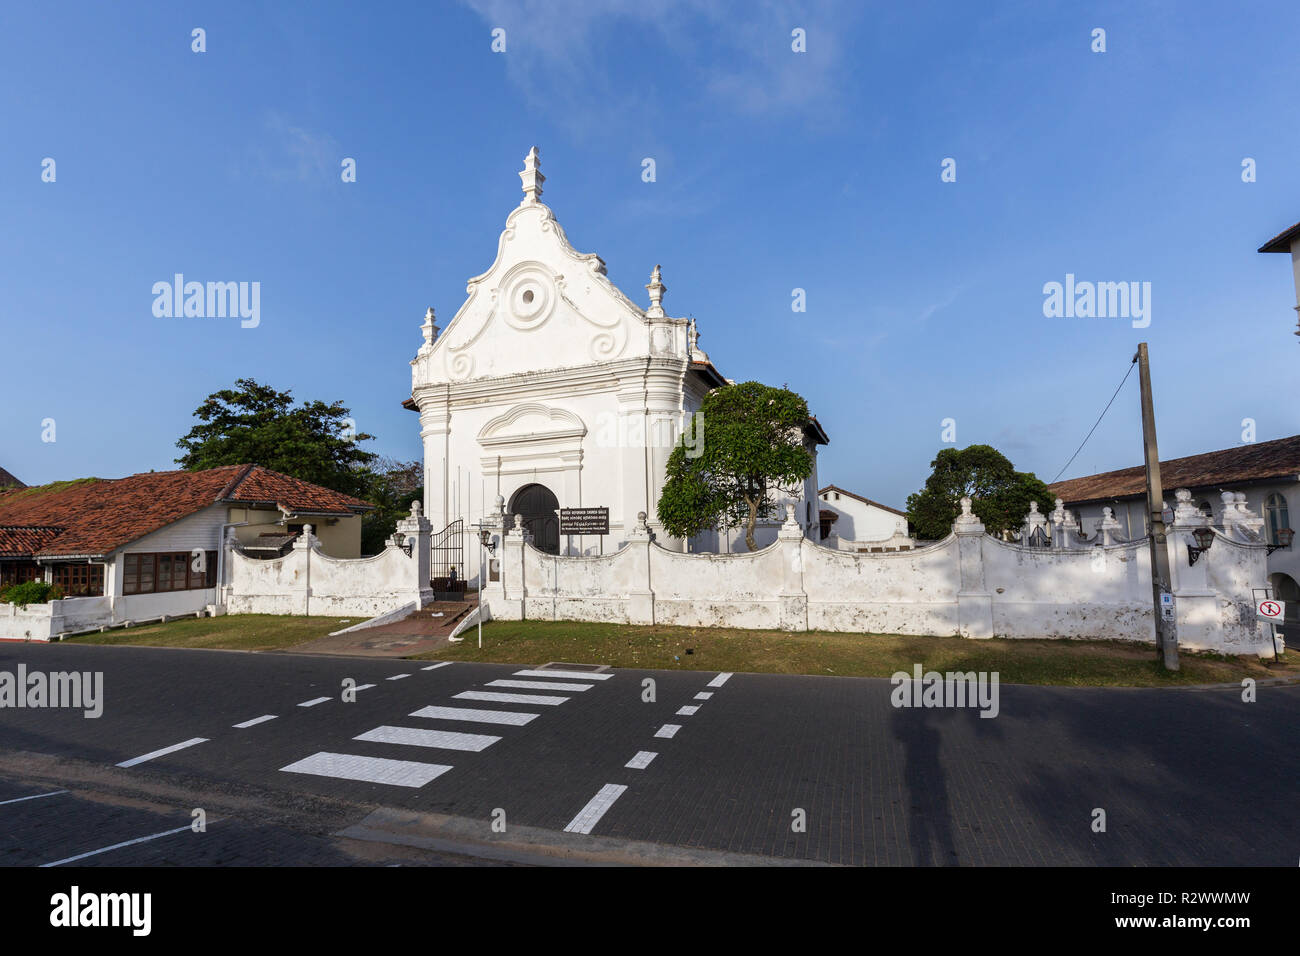 Chiesa olandese riformata in Forte Galle, Sri Lanka Foto Stock